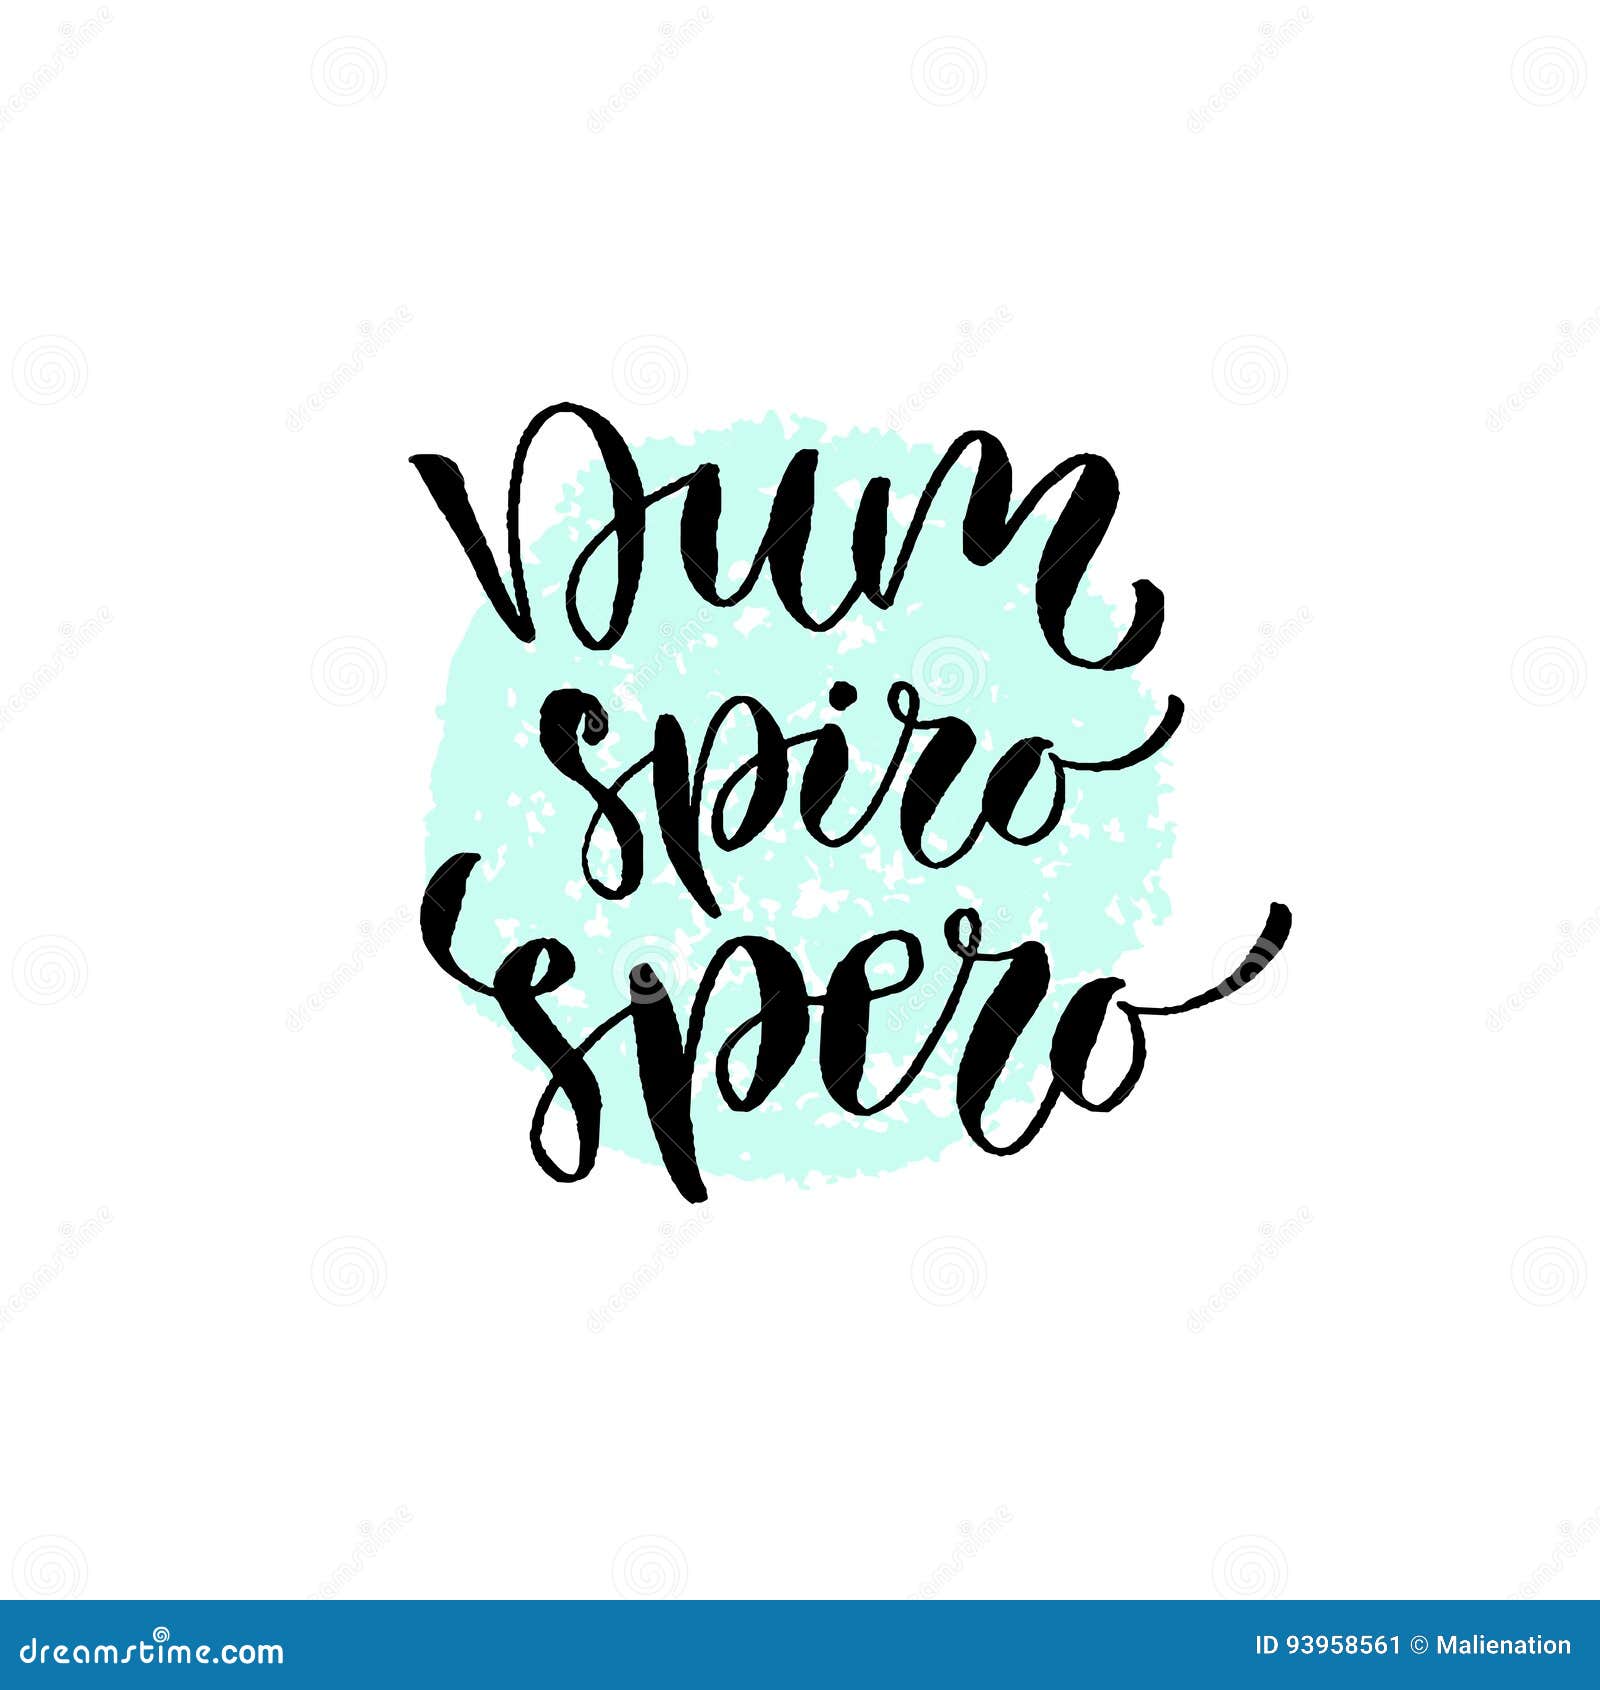 latin  phrase - dum spiro spero. modern calligraphic print. handwritten quote for cards, poster or t-shirt.